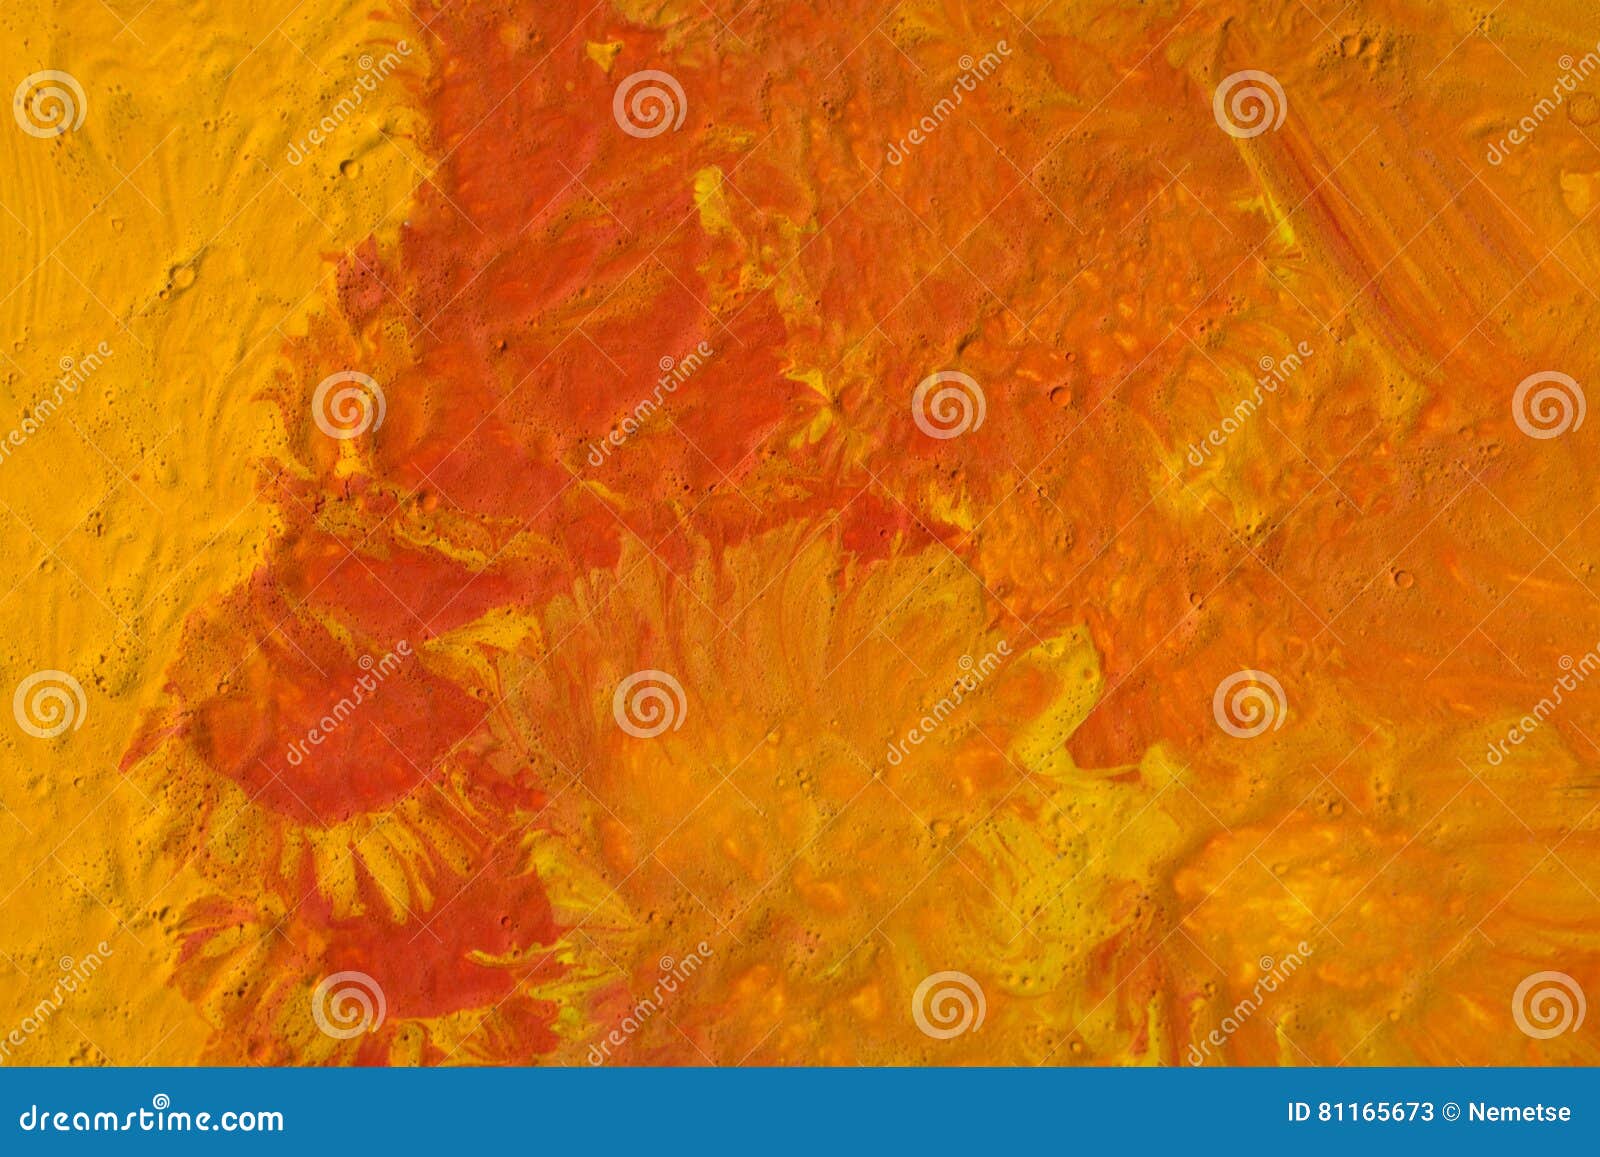 Orange Paint Texture Background Stock Illustration - Illustration of ...